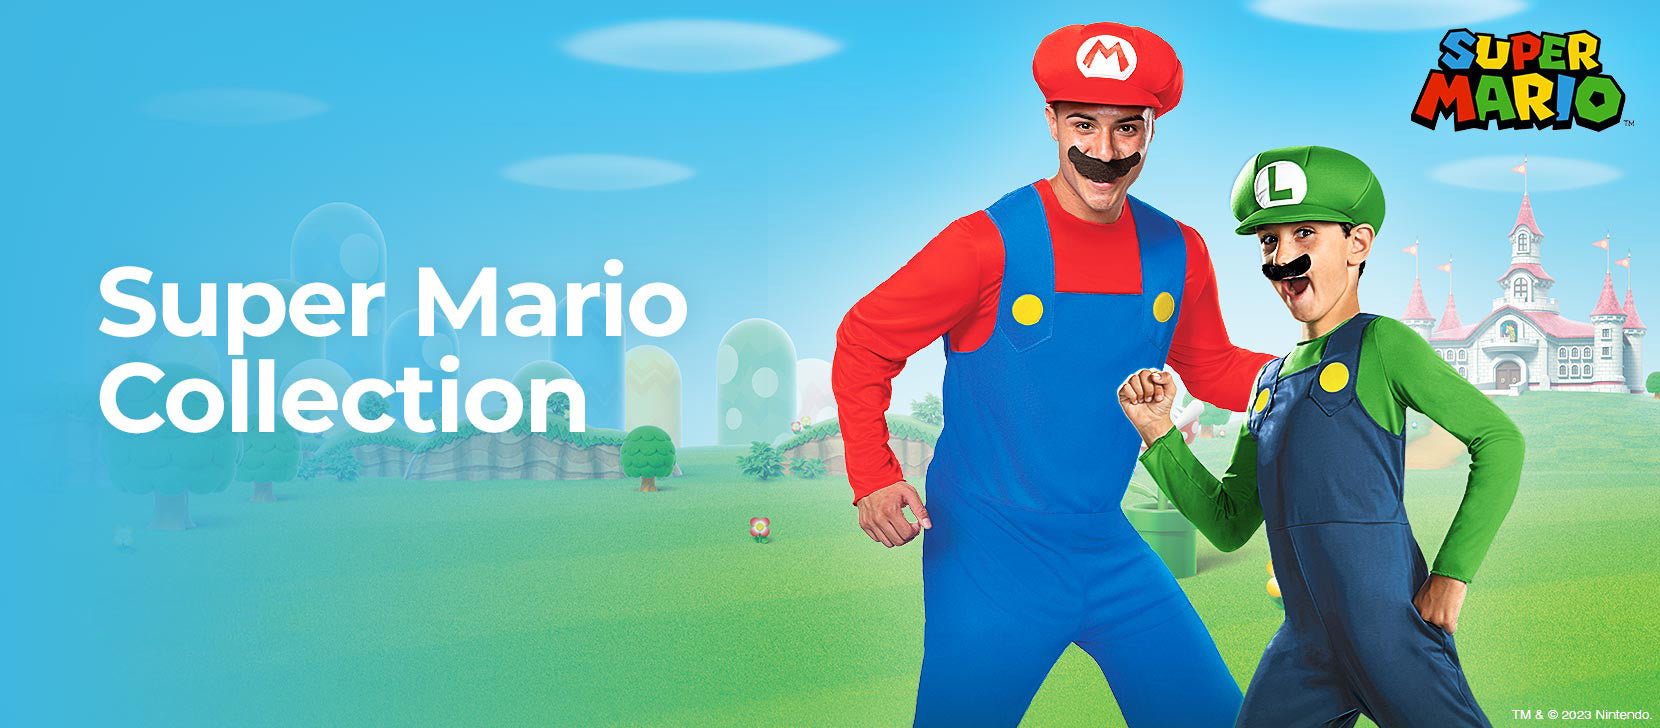 Super-Mario Kostüme